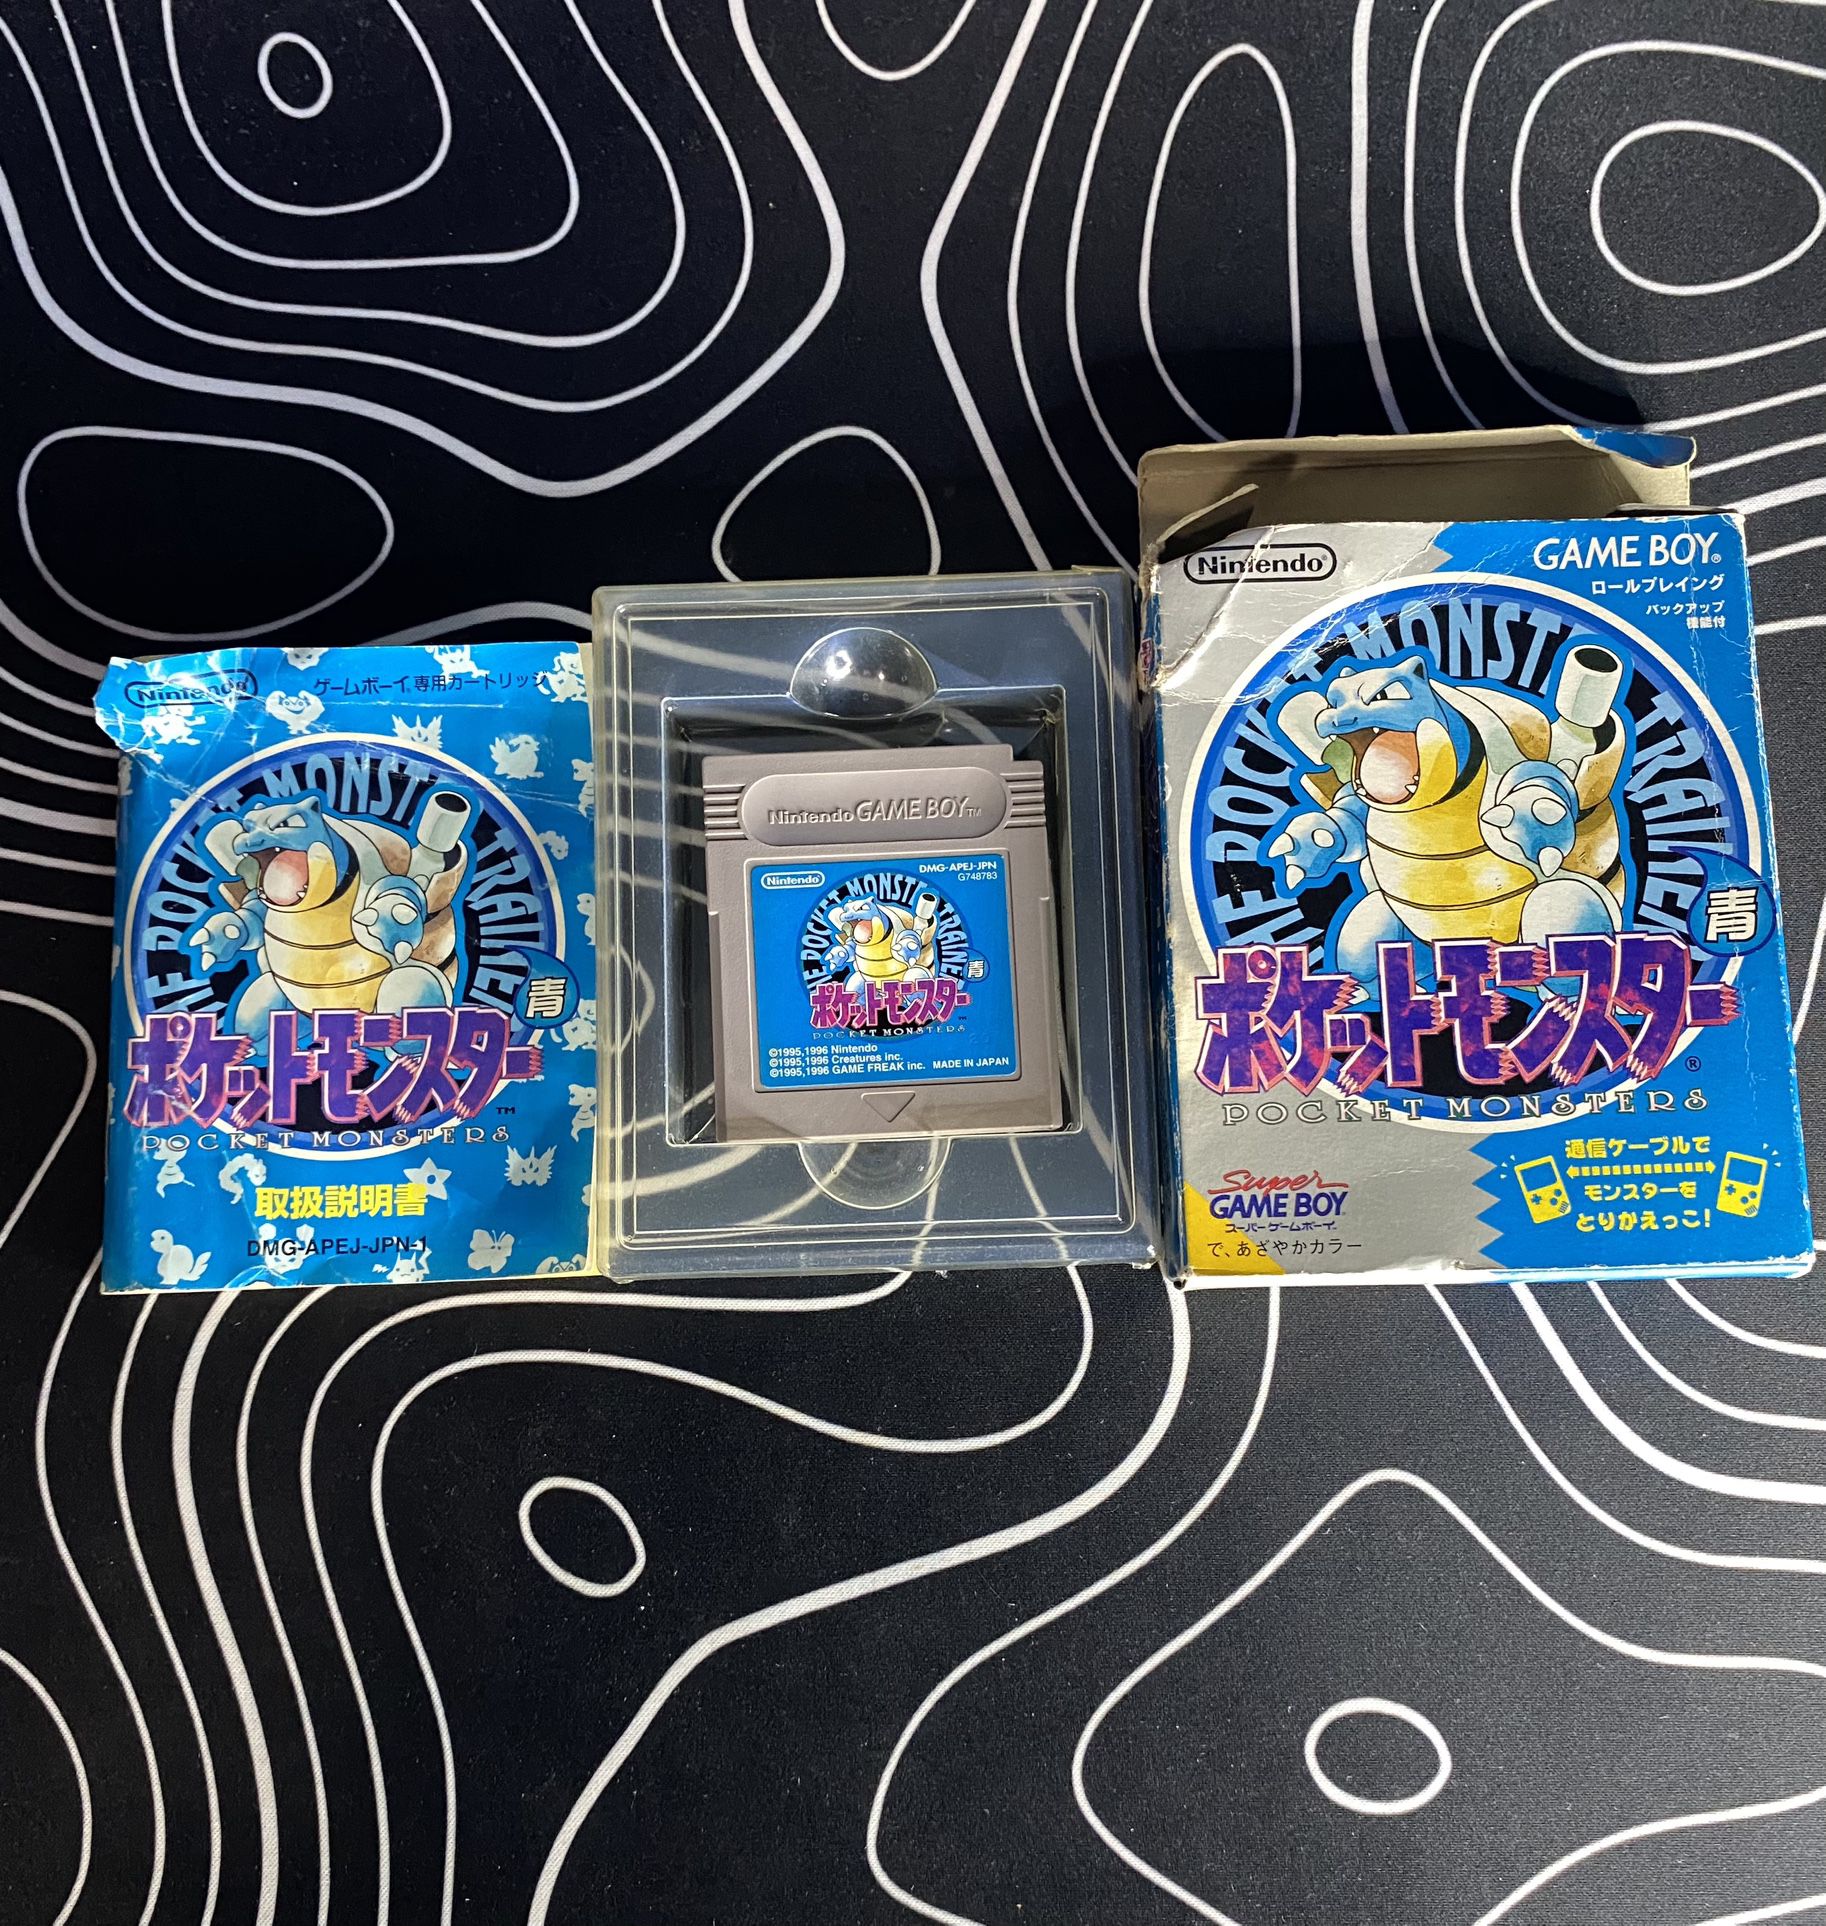 Japanese Game Boy Pocket Monsters Pokemon Blue Boxed Japan GameBoy GB game. 